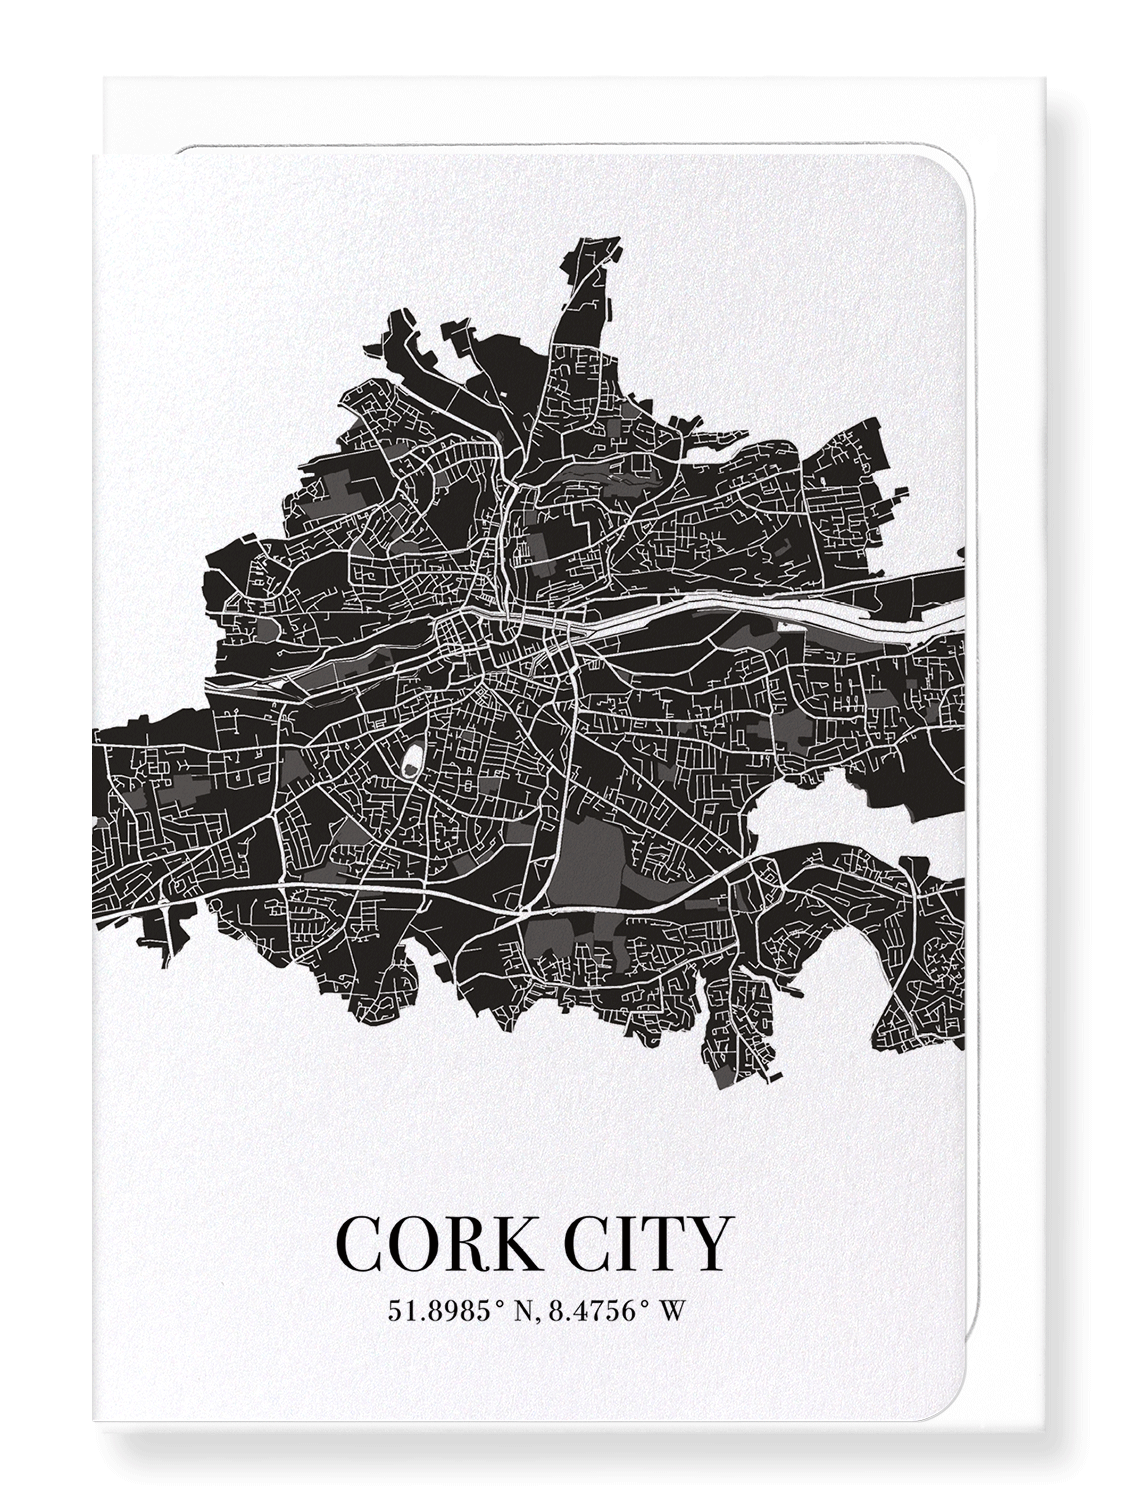 CORK CITY  CUTOUT: Map Cutout Greeting Card